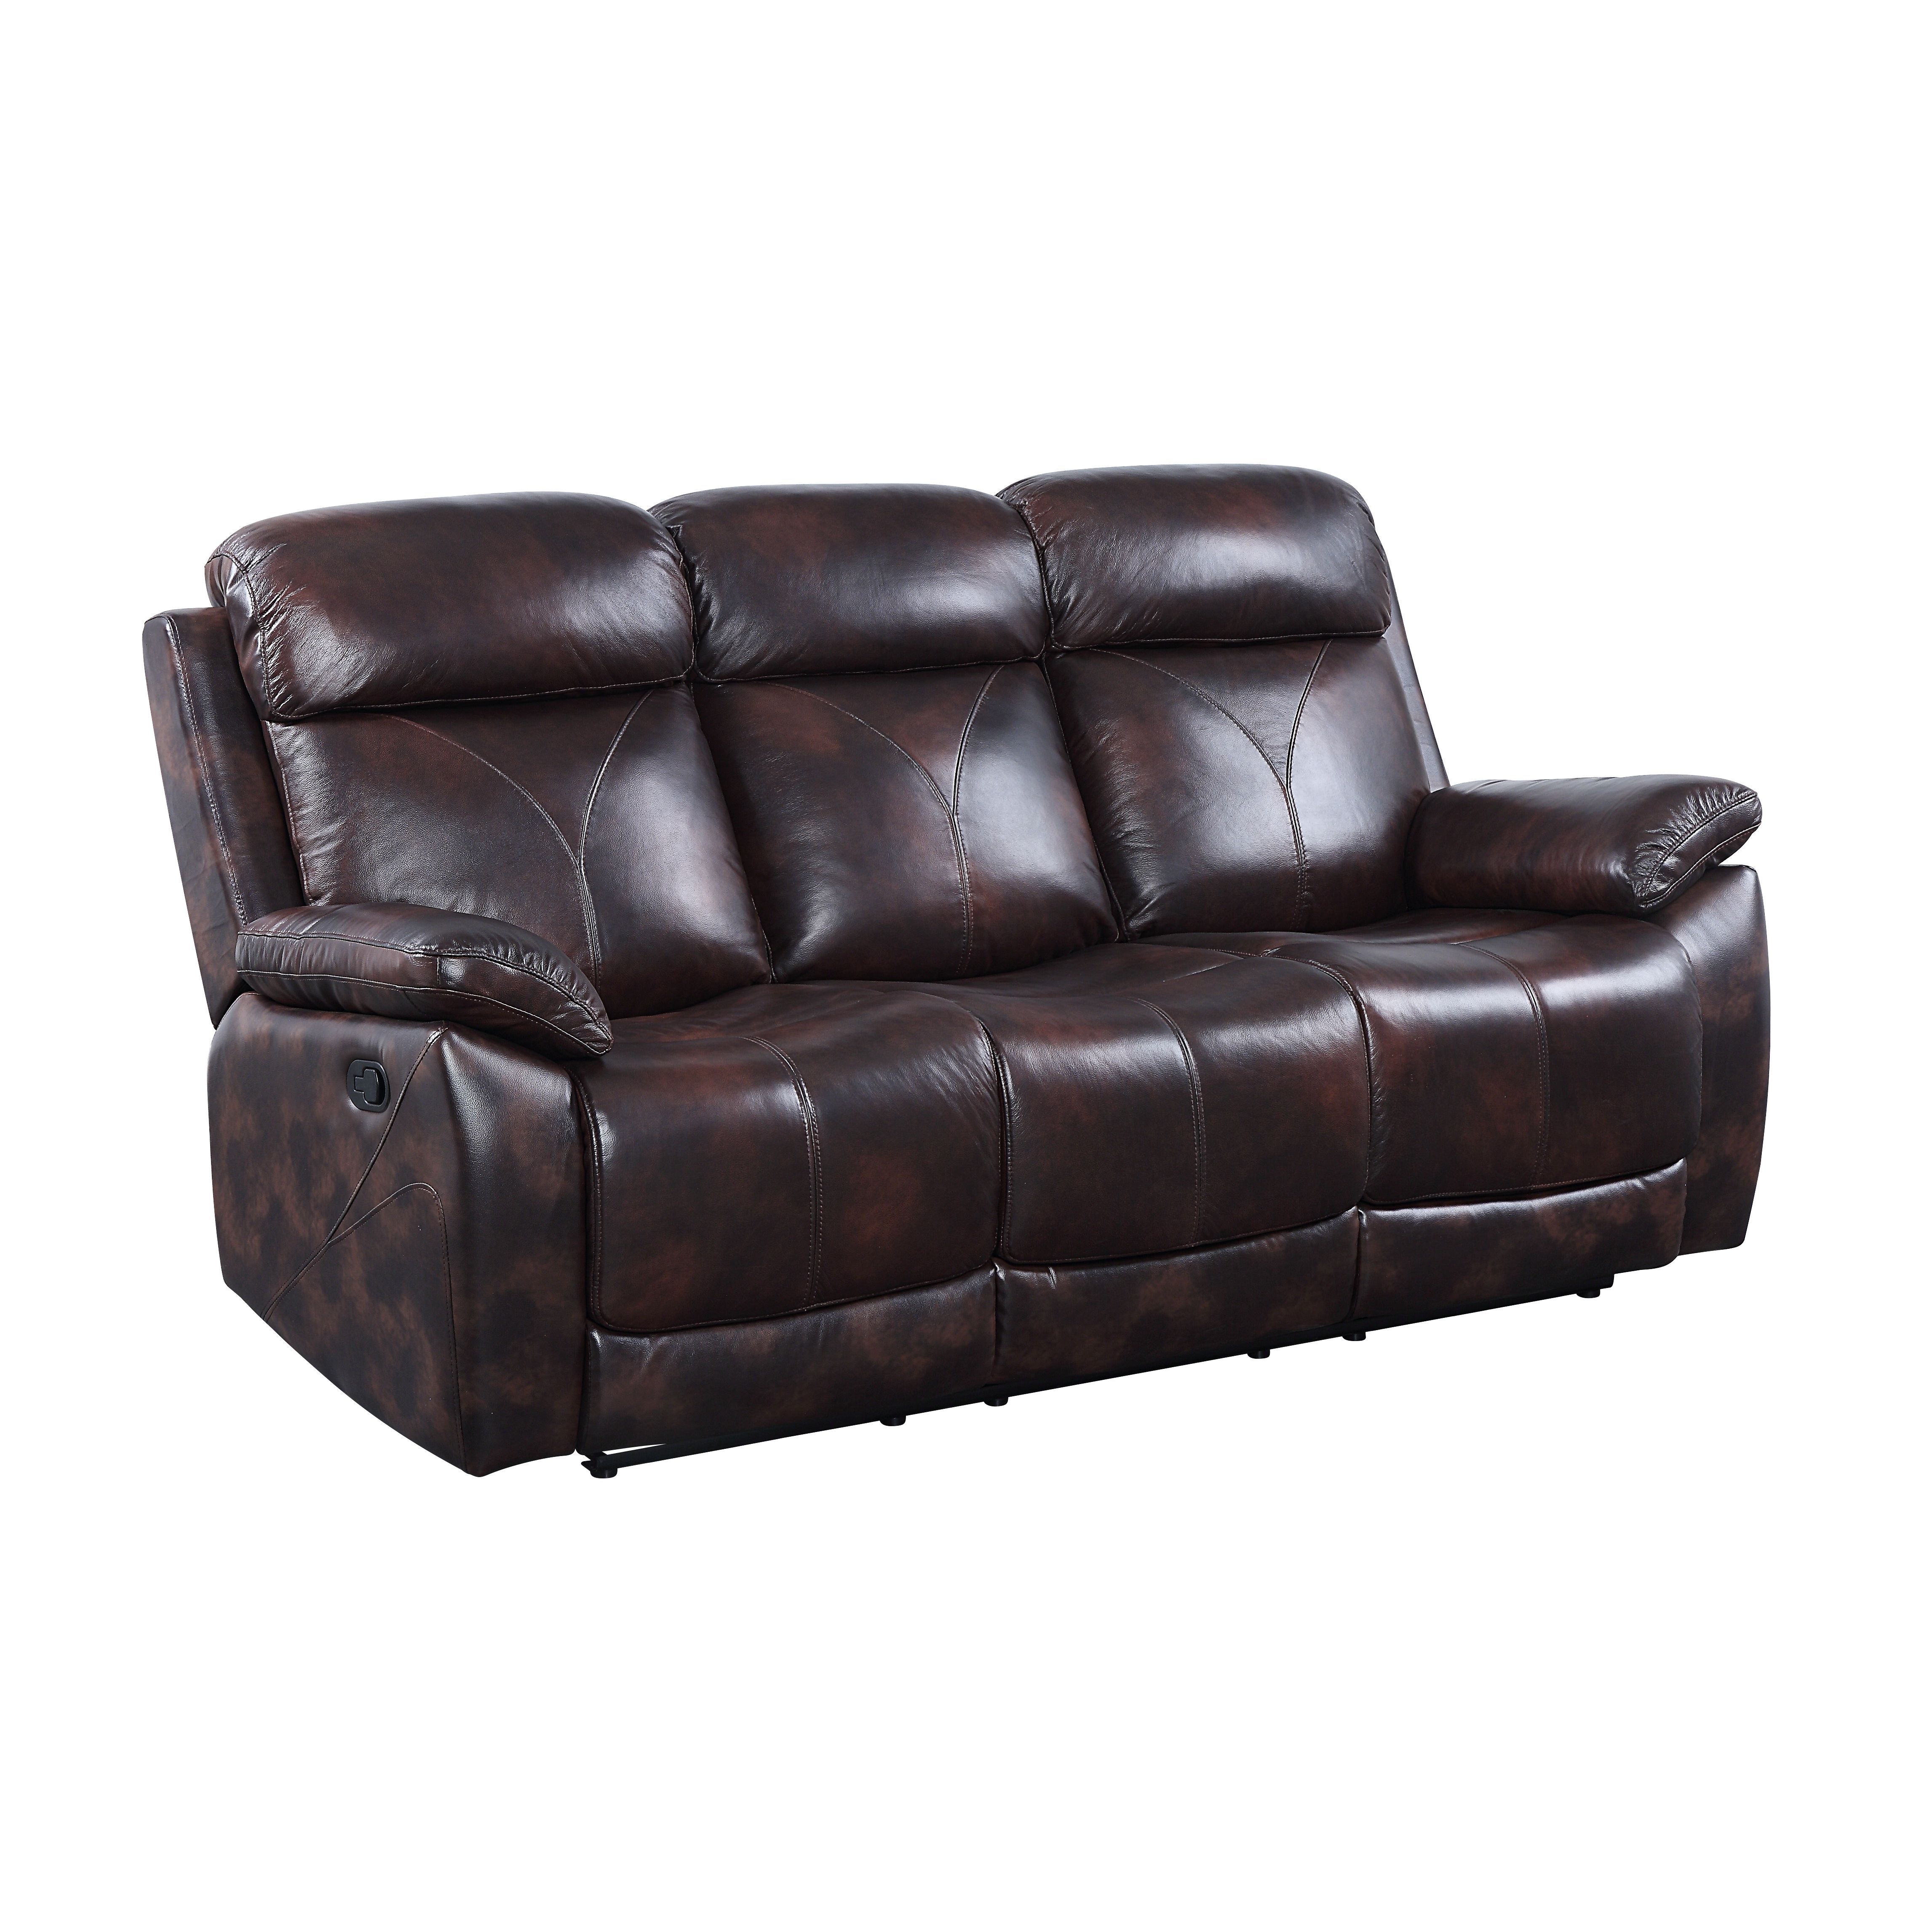 ACME Perfiel Motion Sofa in 2 Tone Dark Brown Top Grain Leather-Boyel Living